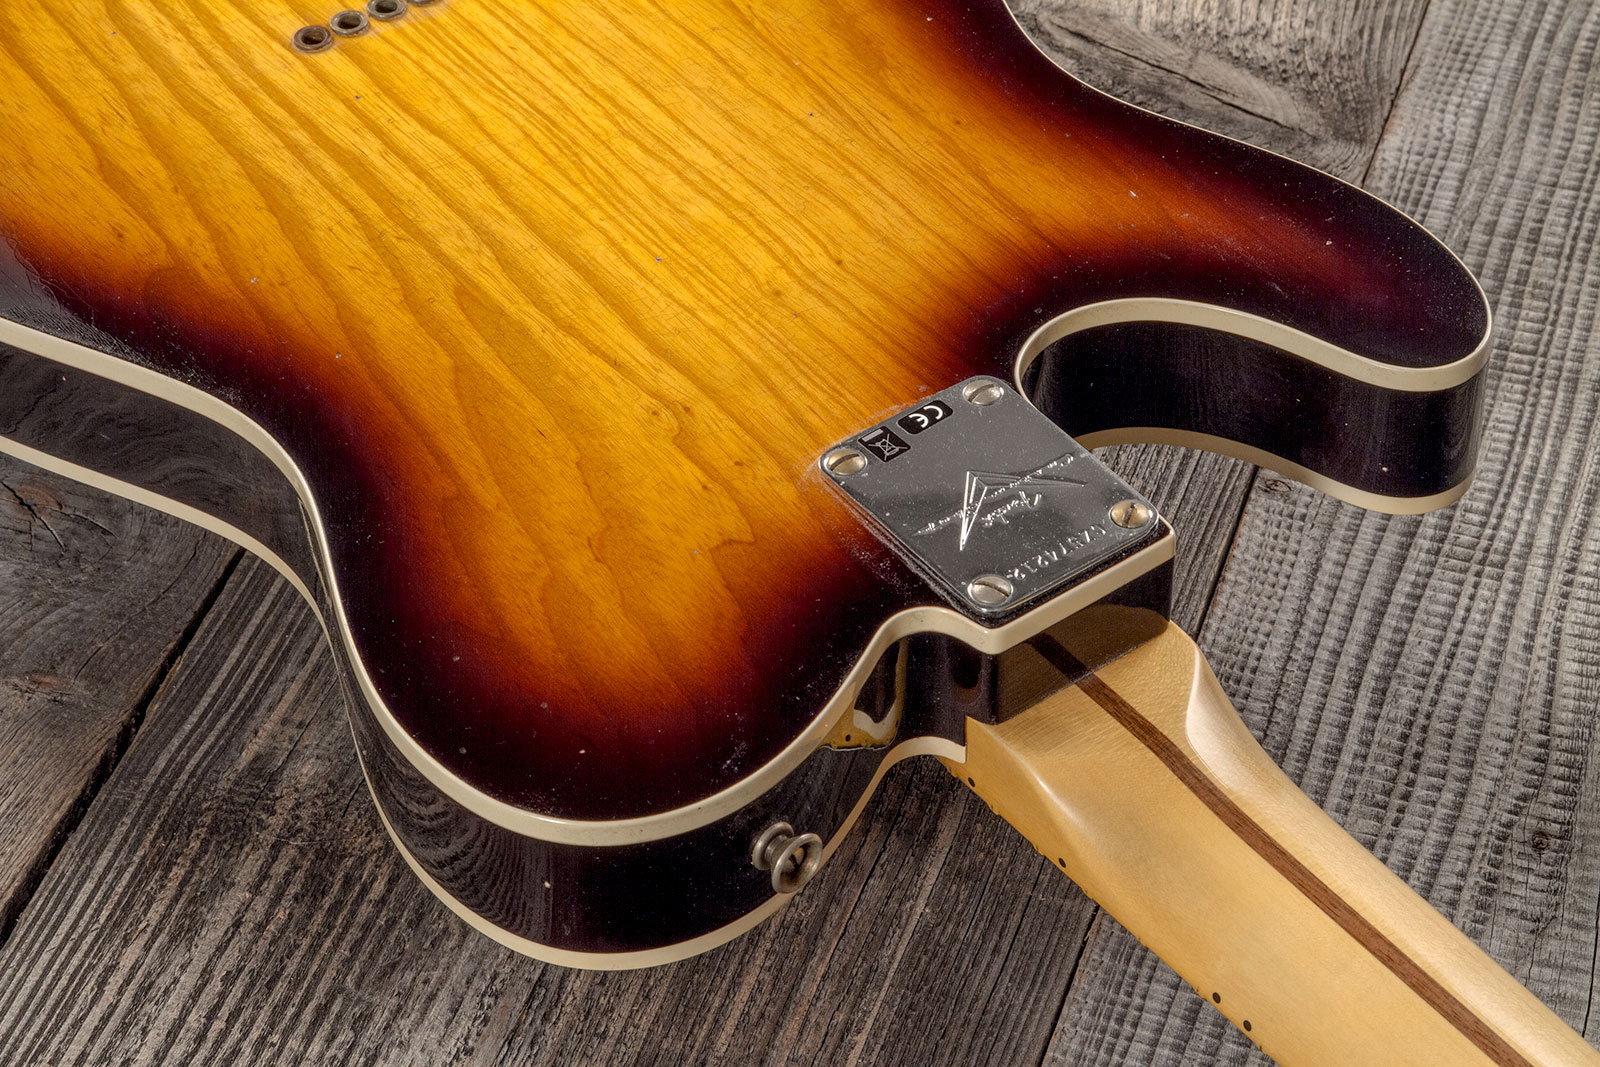 Fender Custom Shop Tele Thinline 50s Mn #cz574212 - Journeyman Relic Aged 2-color Sunburst - Tel shape electric guitar - Variation 7